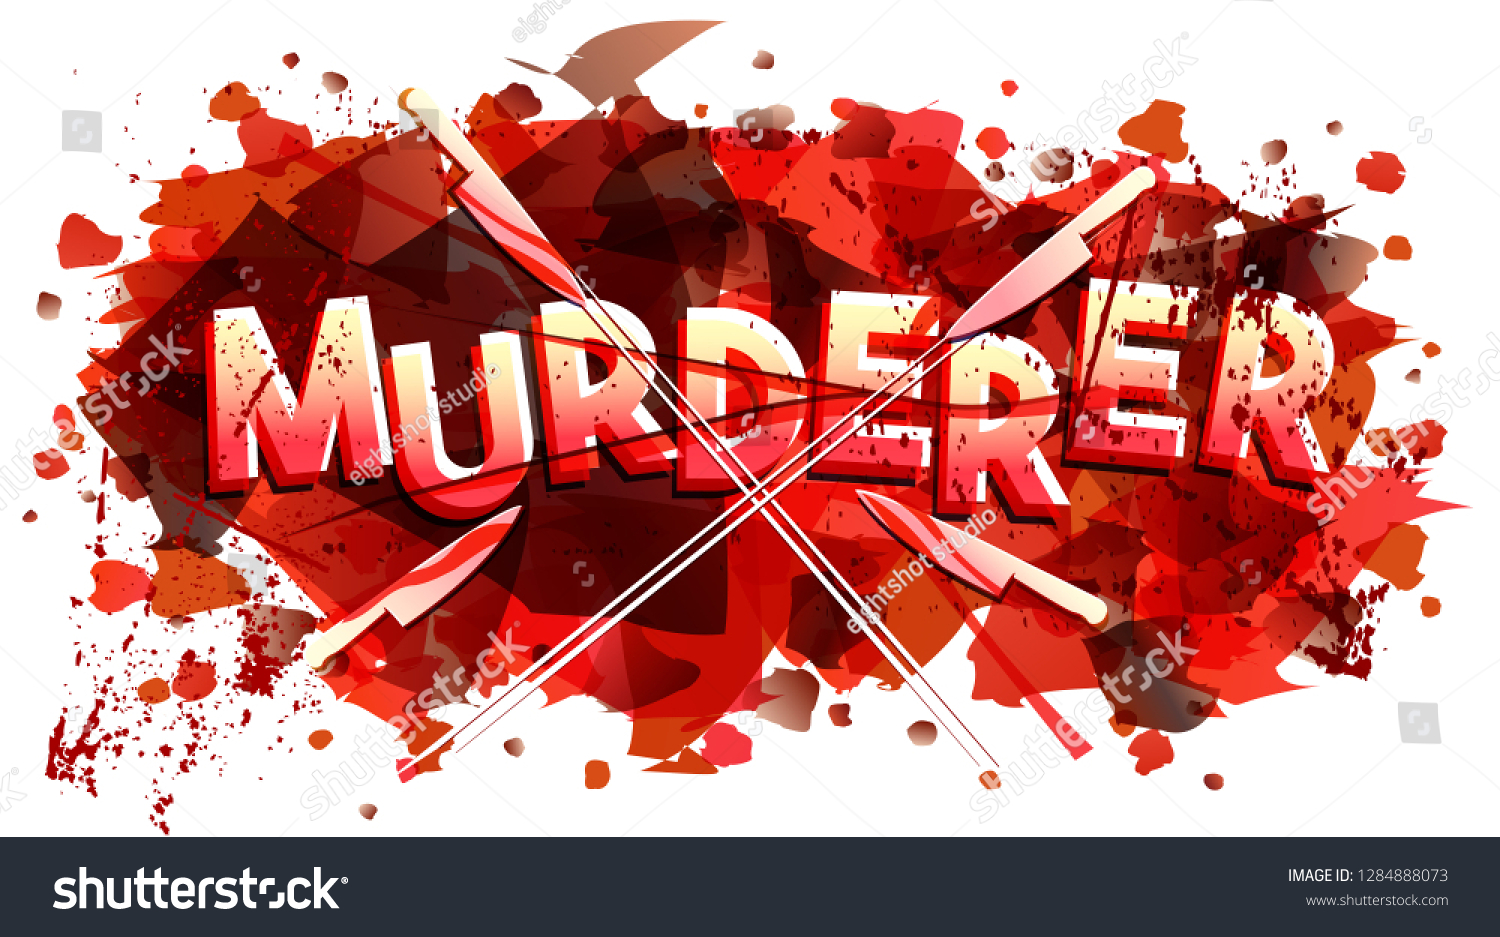 Word Murderer Vector Creative Illustration Stock Vector Royalty Free 1284888073 